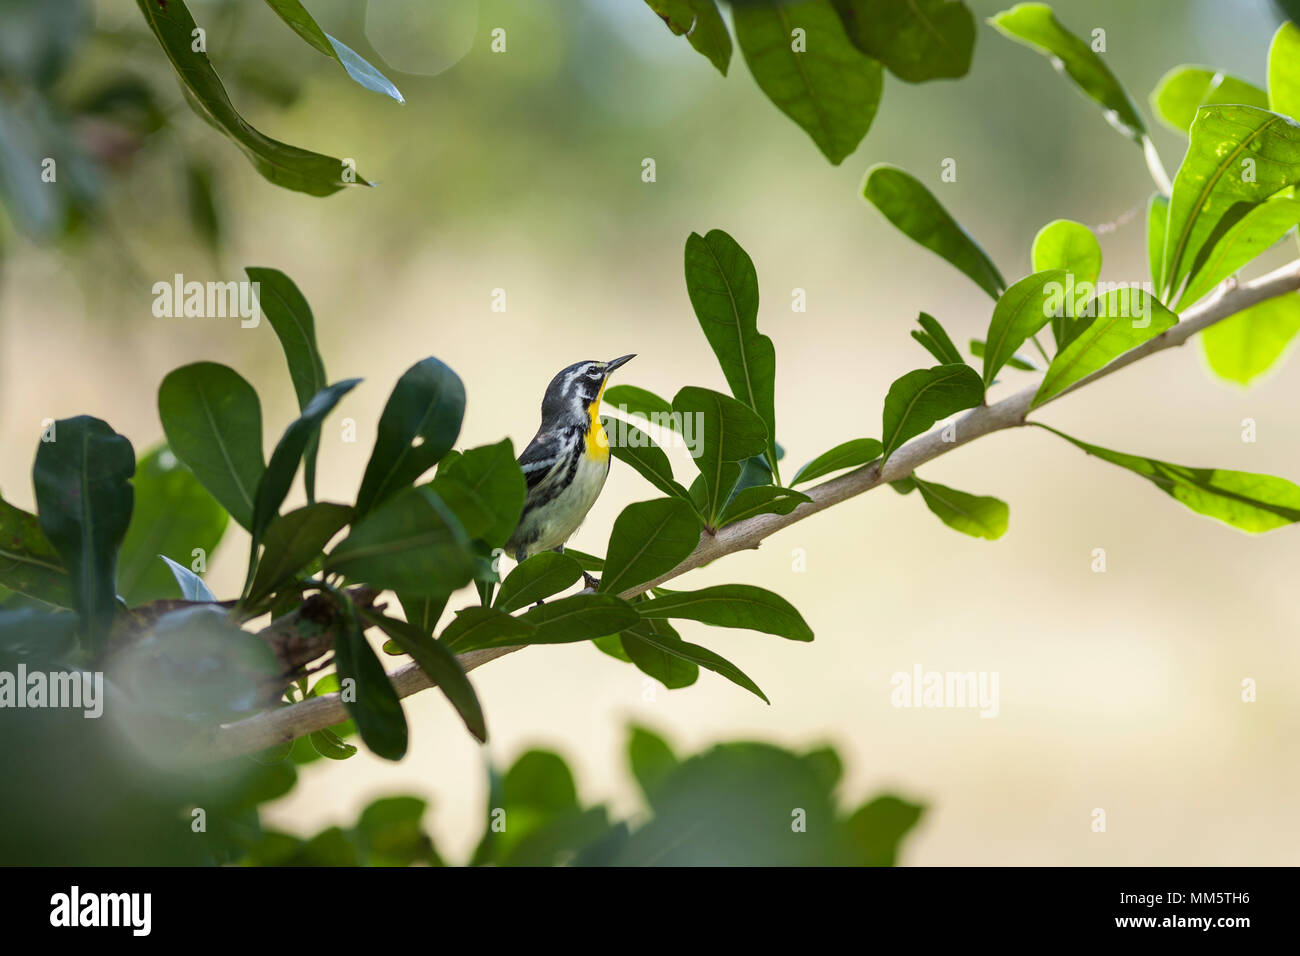 Blackburnian Warbler bird perching on tree branch, Cienfuegos, Cuba Stock Photo